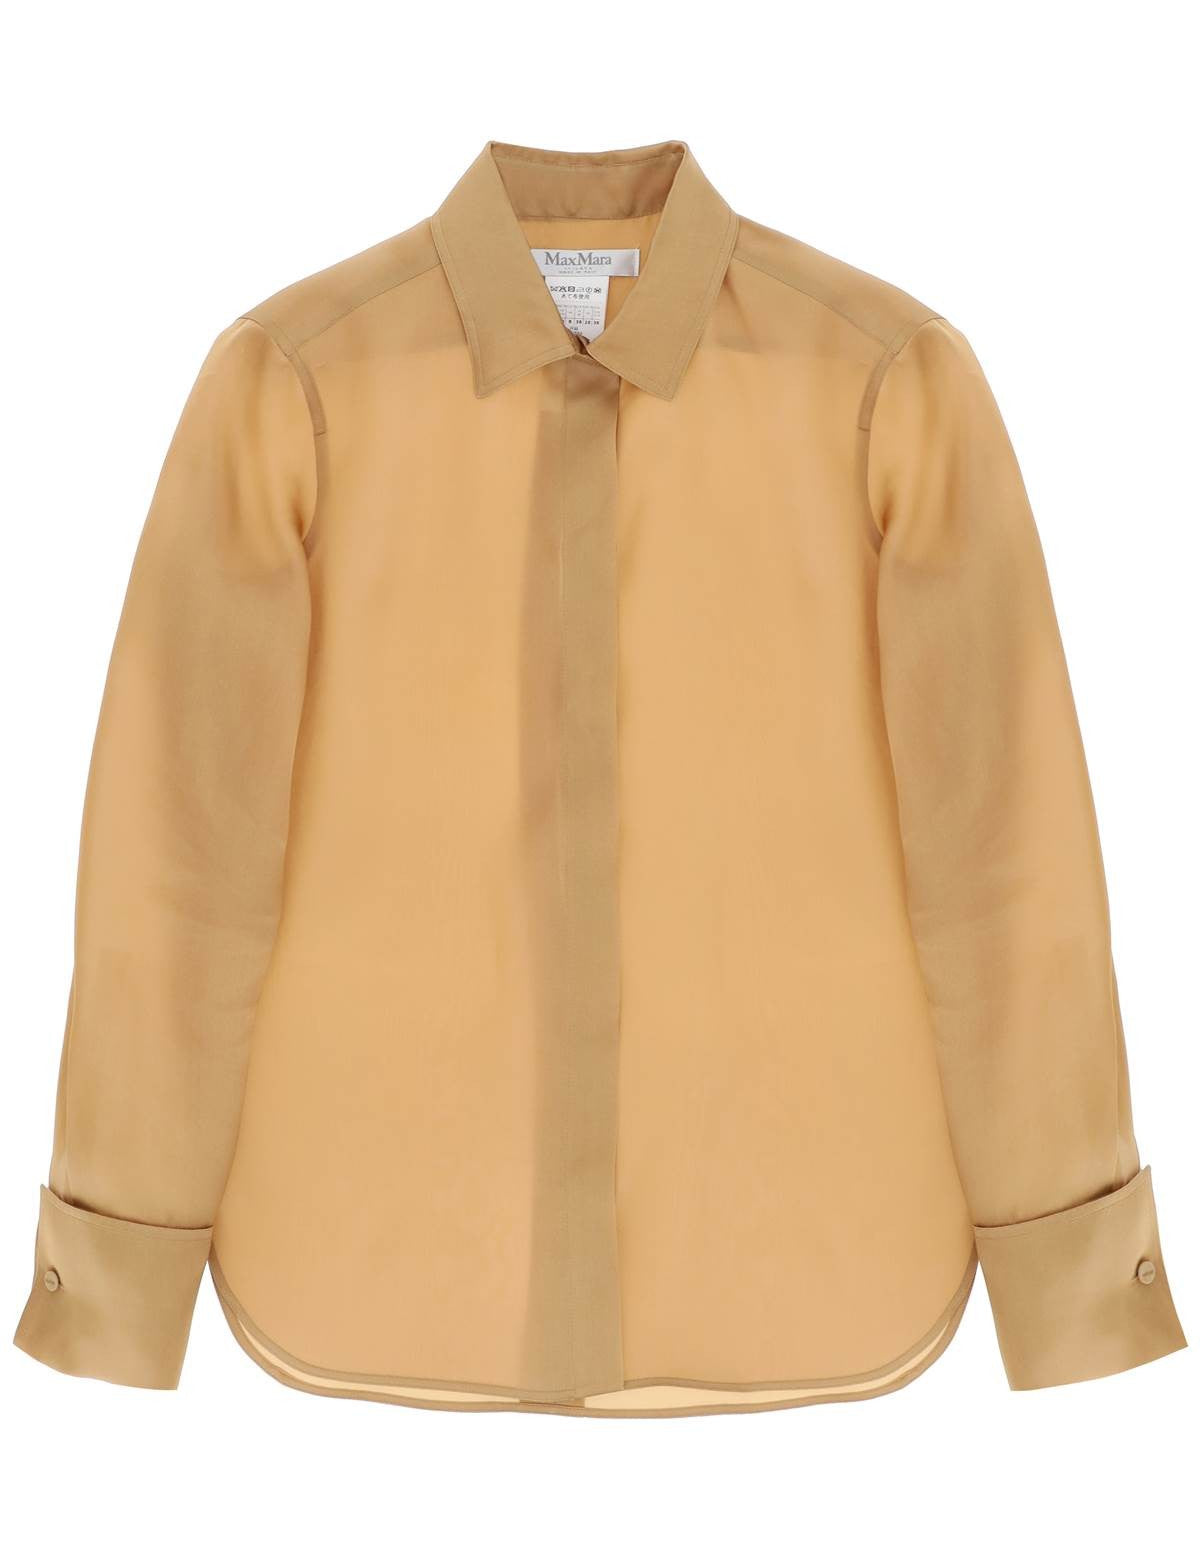 max-mara-nola-silk-organza-shirt-in-italian_1936f967-3d5d-4442-b04f-c5d9be2eafd7.jpg